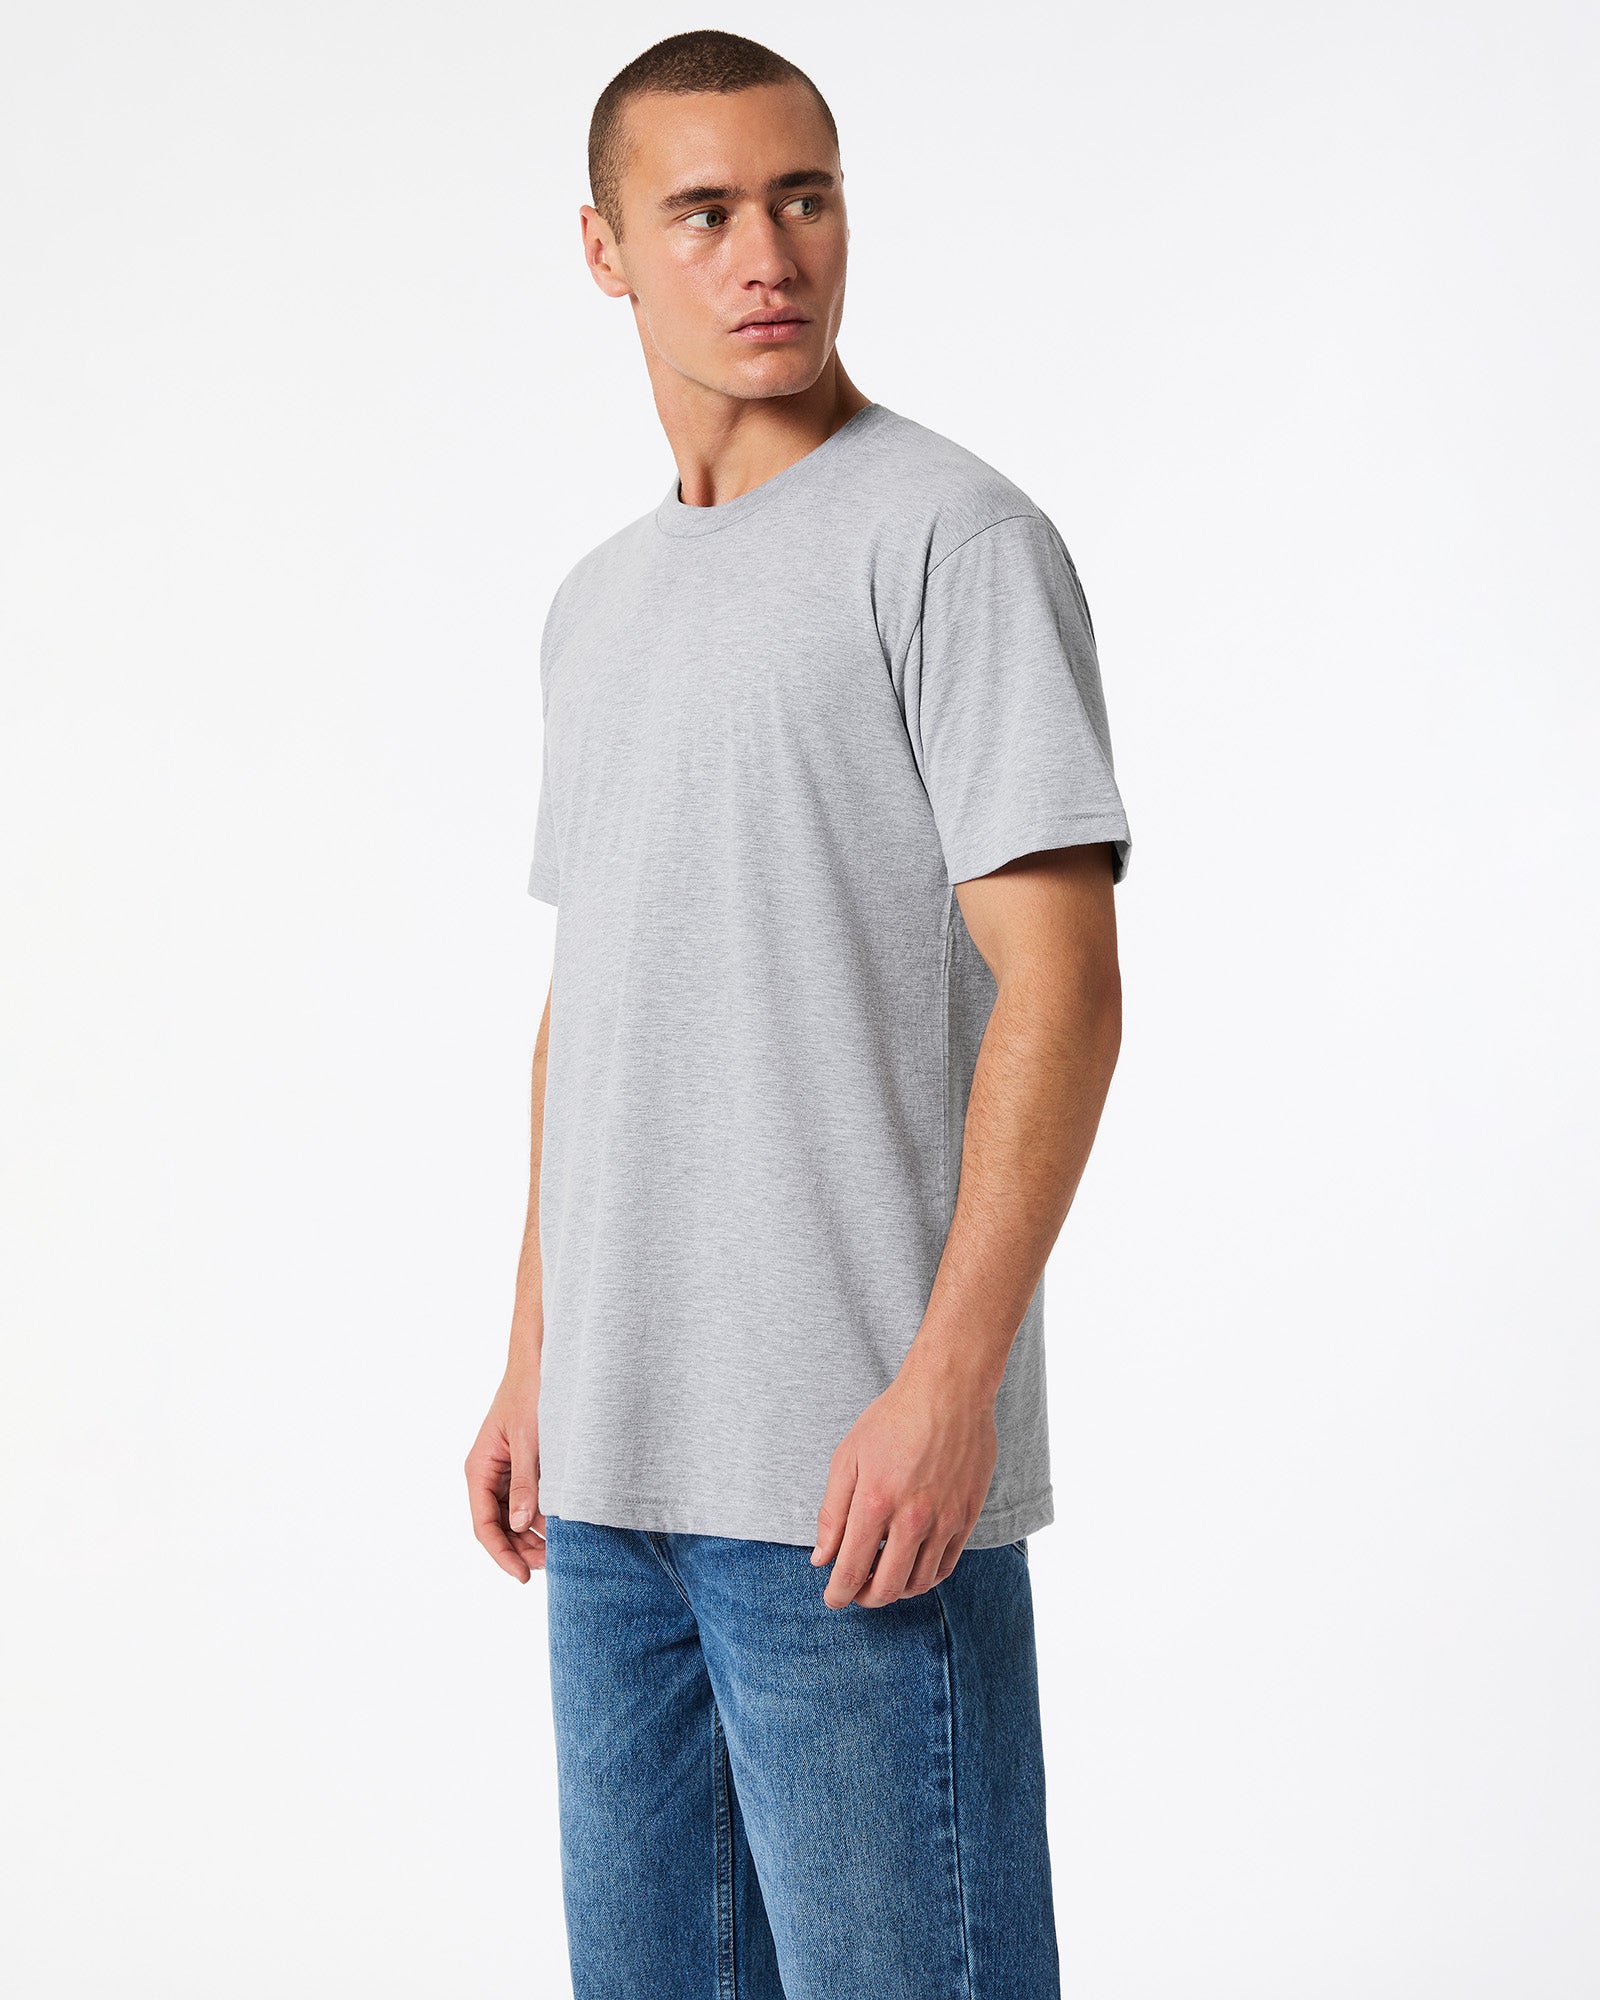 Fine Jersey Unisex Short Sleeve T-Shirt - Heather Grey